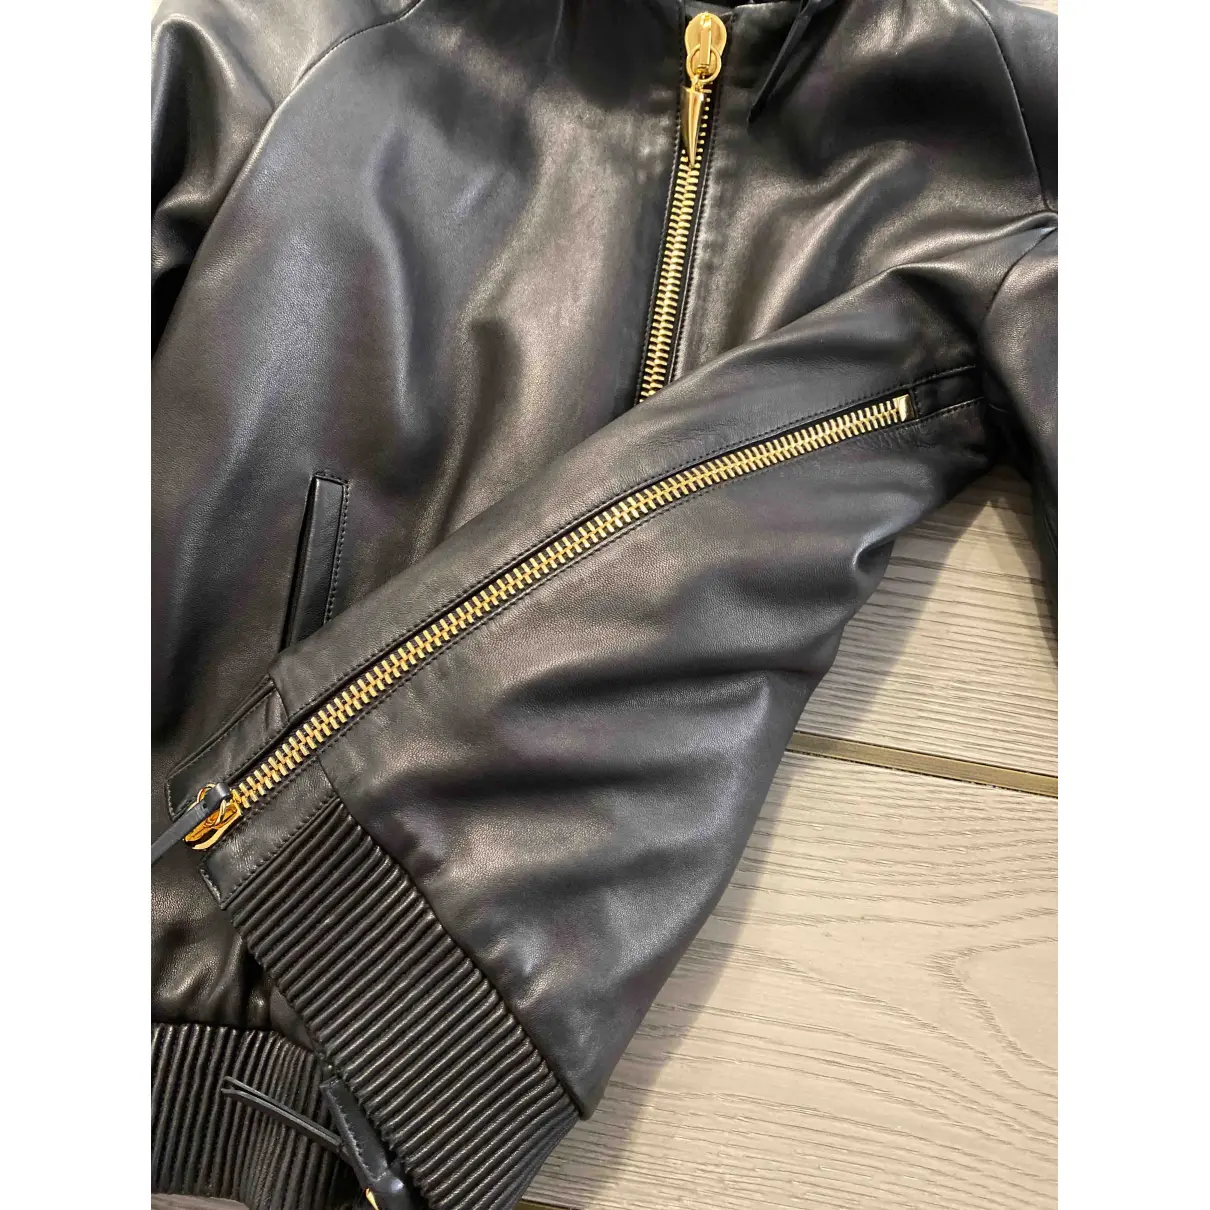 Leather biker jacket Giuseppe Zanotti